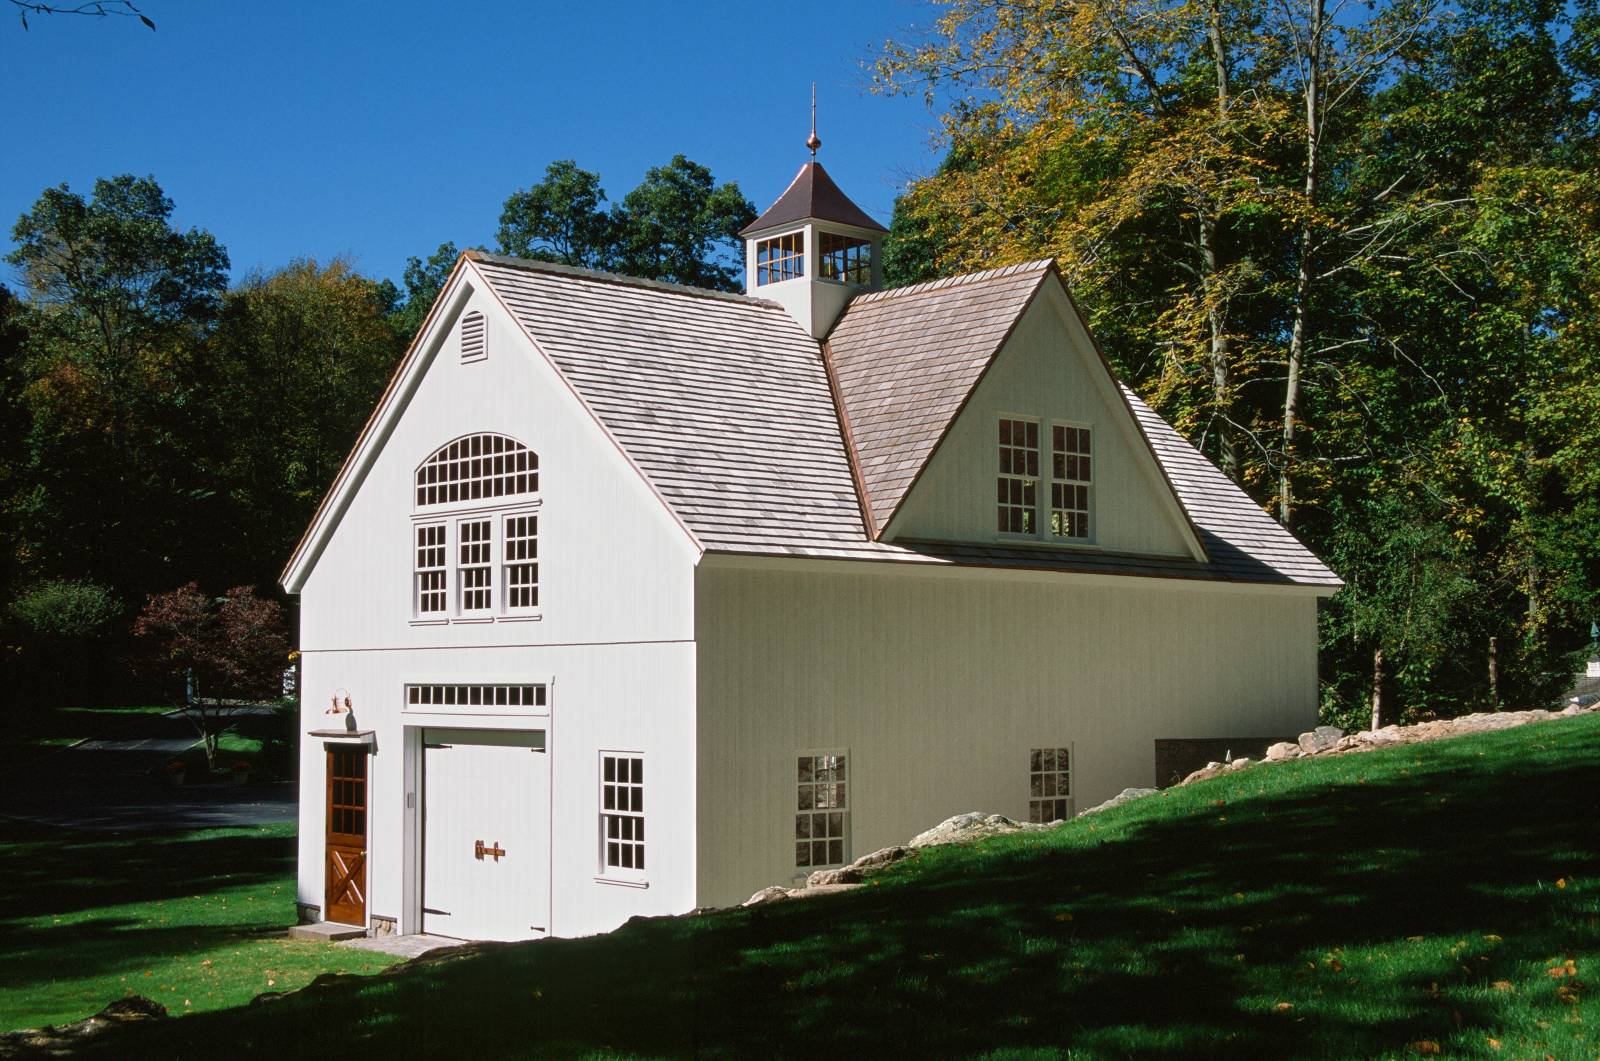 The bank barn features a reverse gable dormer facing the hillside